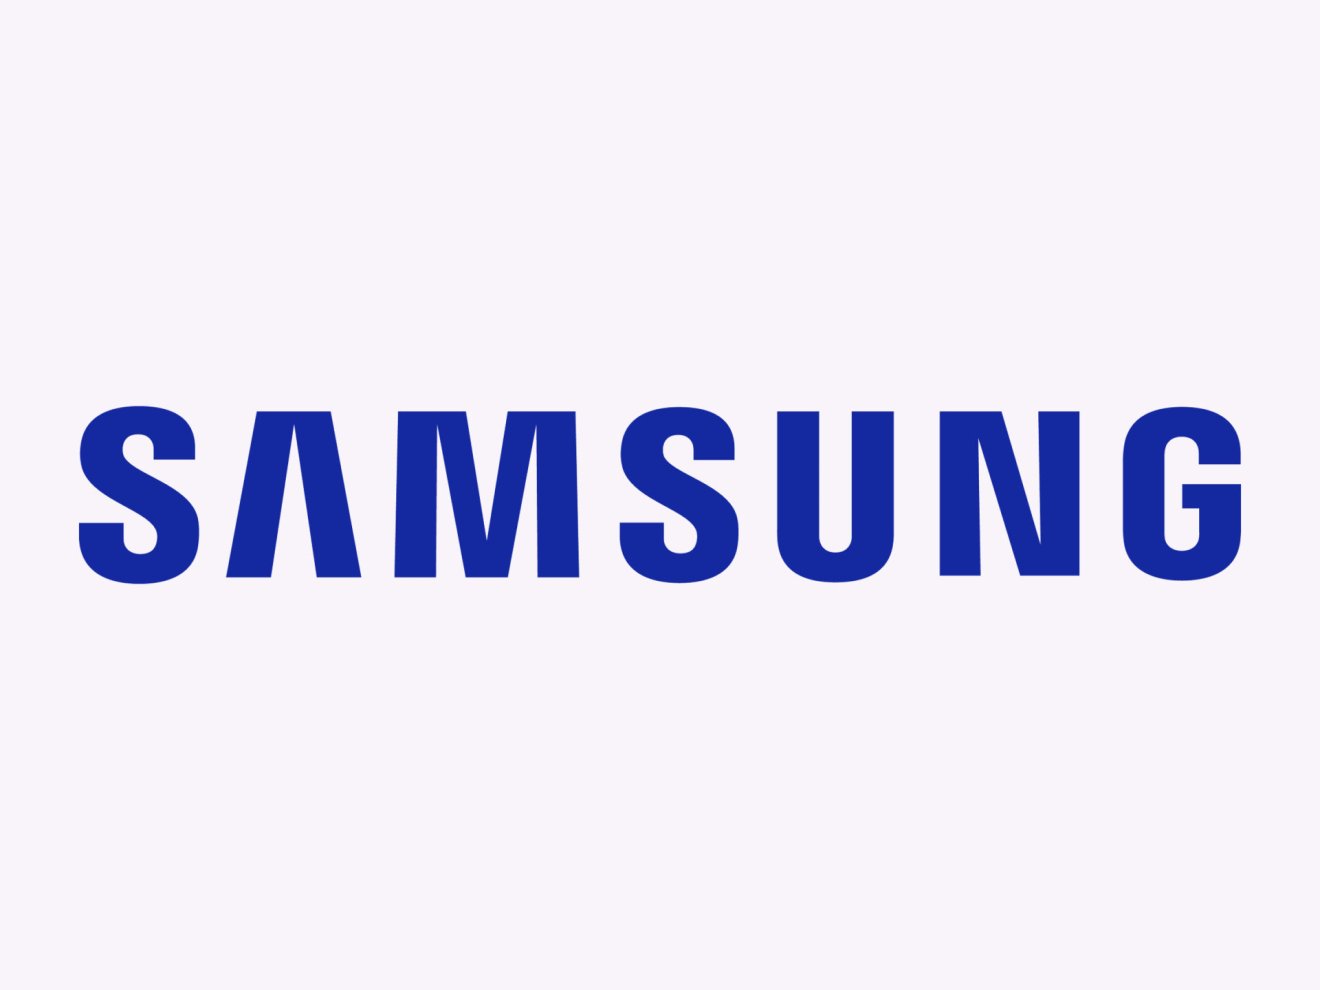 Samsung ยอดขายพุ่ง ทำกำไรในไตรมาสที่ 2 เพิ่มจากเดิมกว่า 50%!